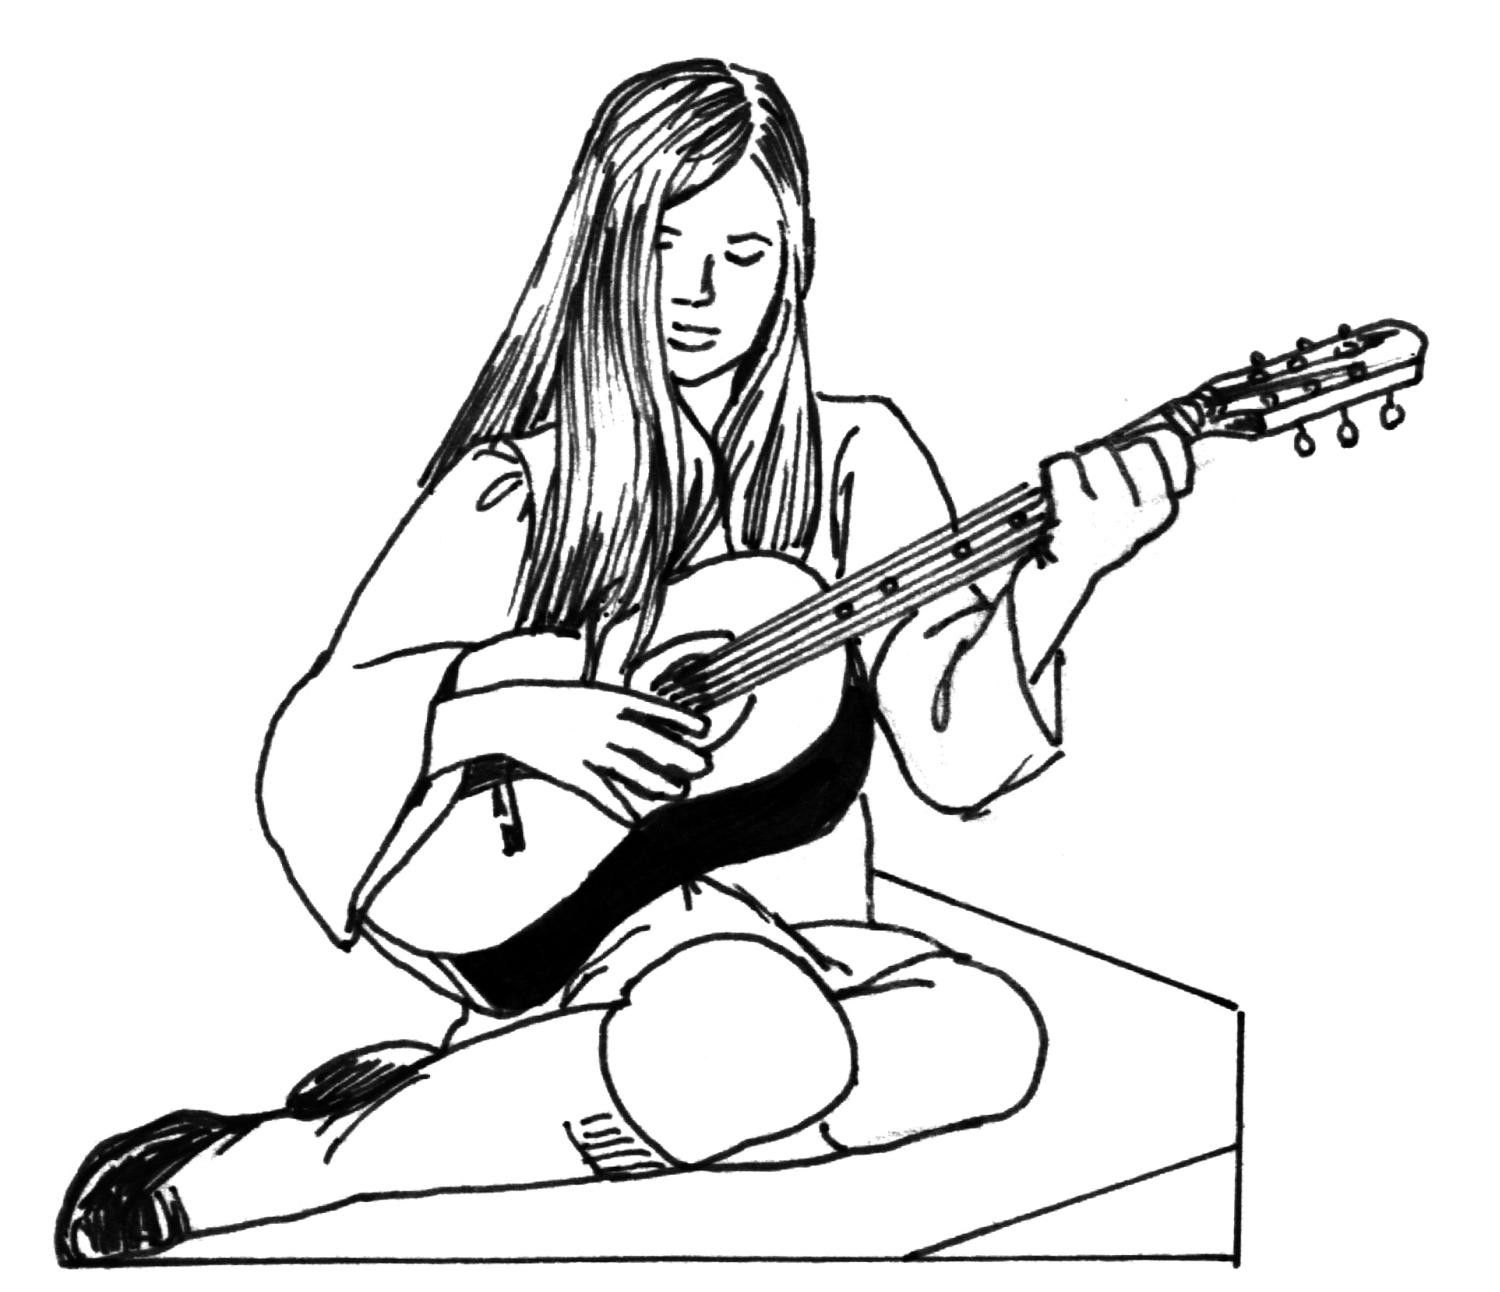 Girl with guitar by LuchoBorello on DeviantArt